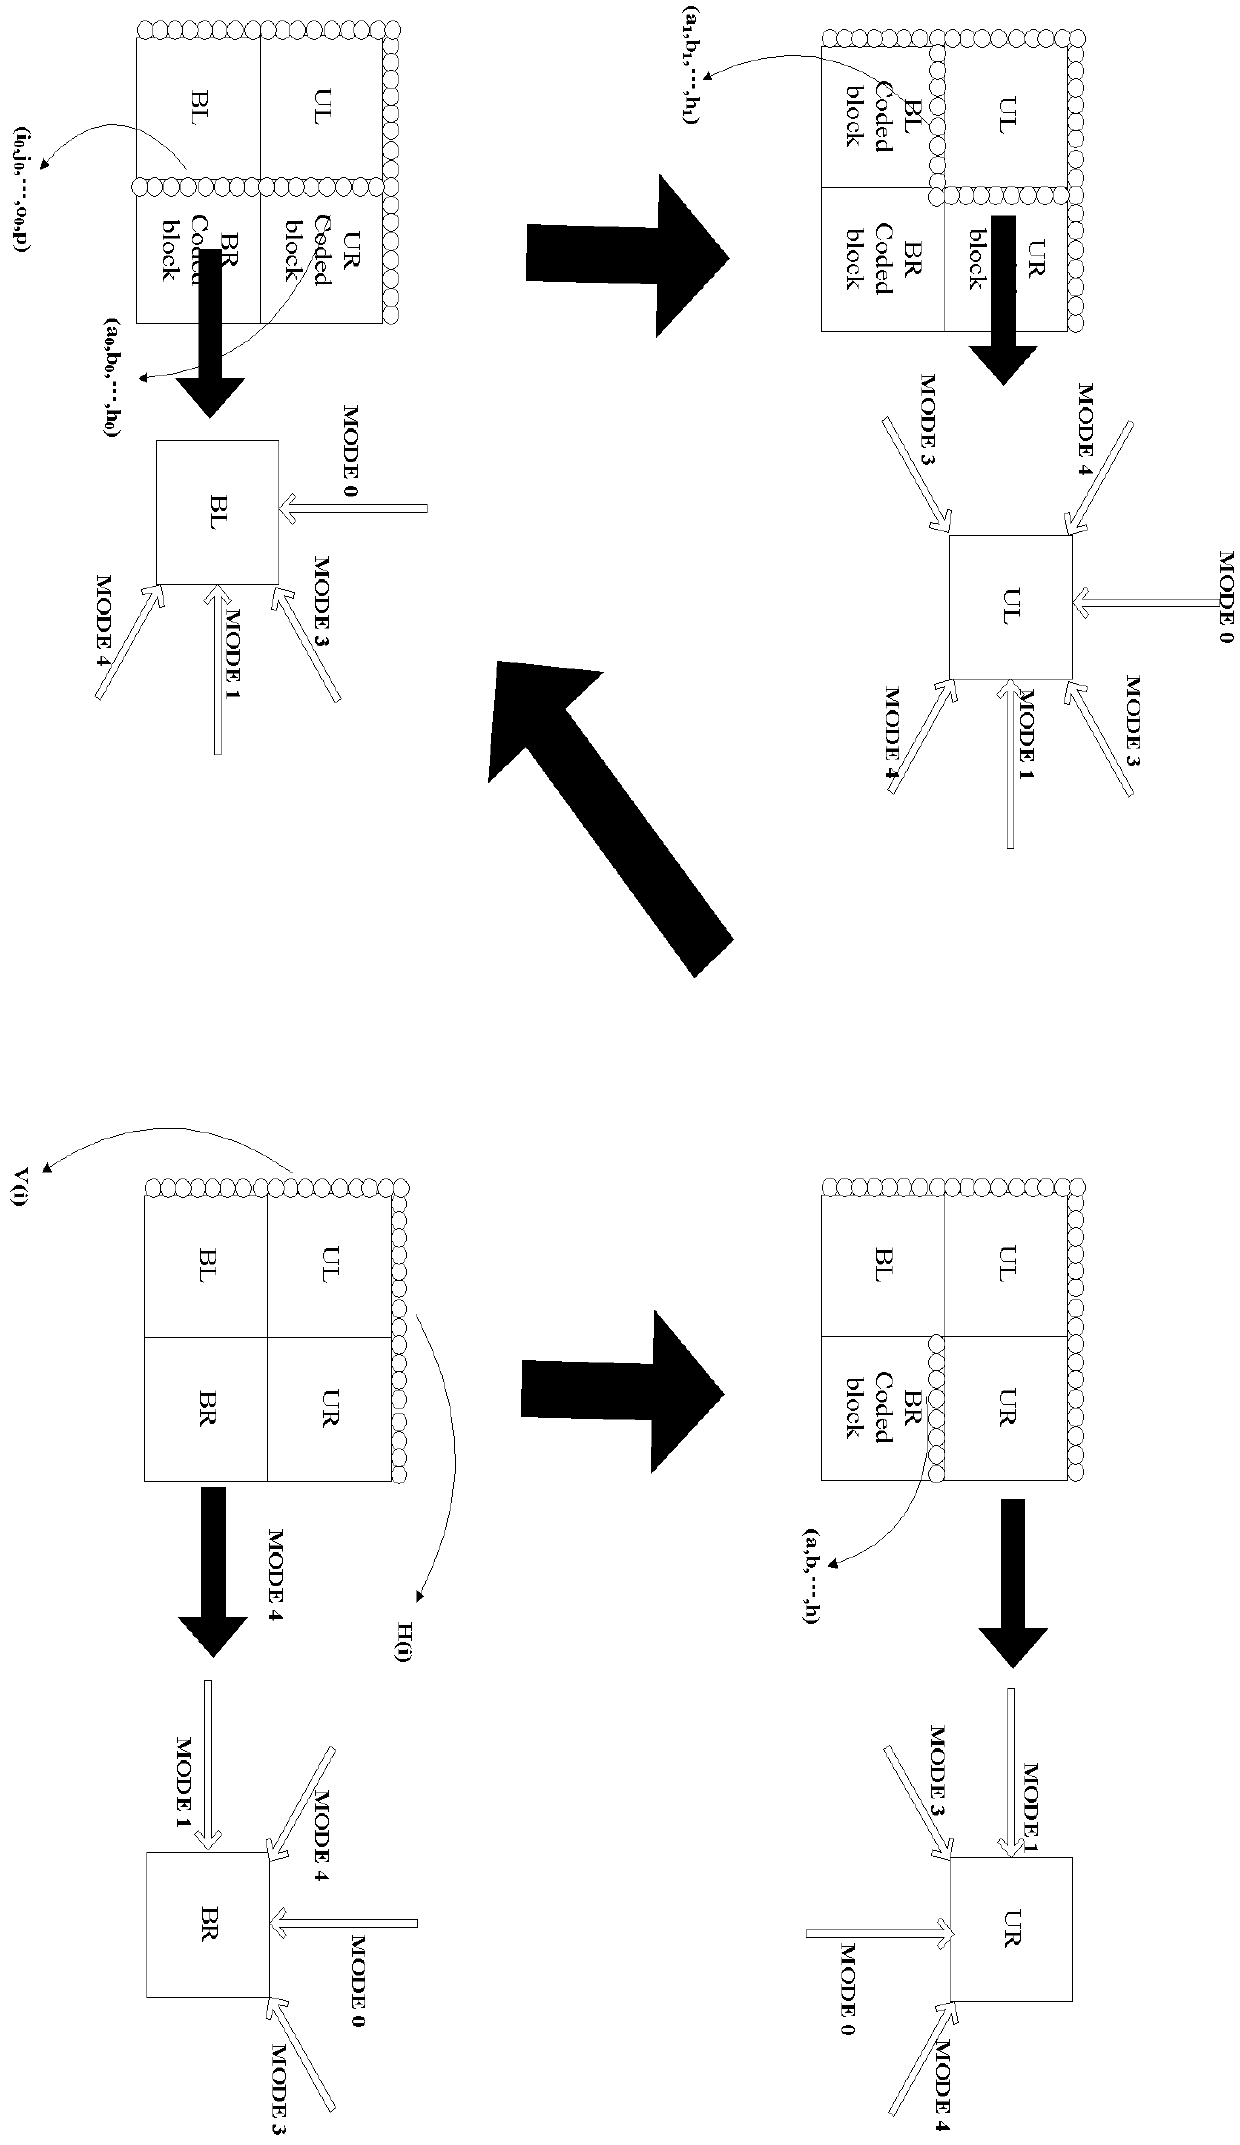 Audio-video-coding-standard (AVS)-based intra-frame prediction method